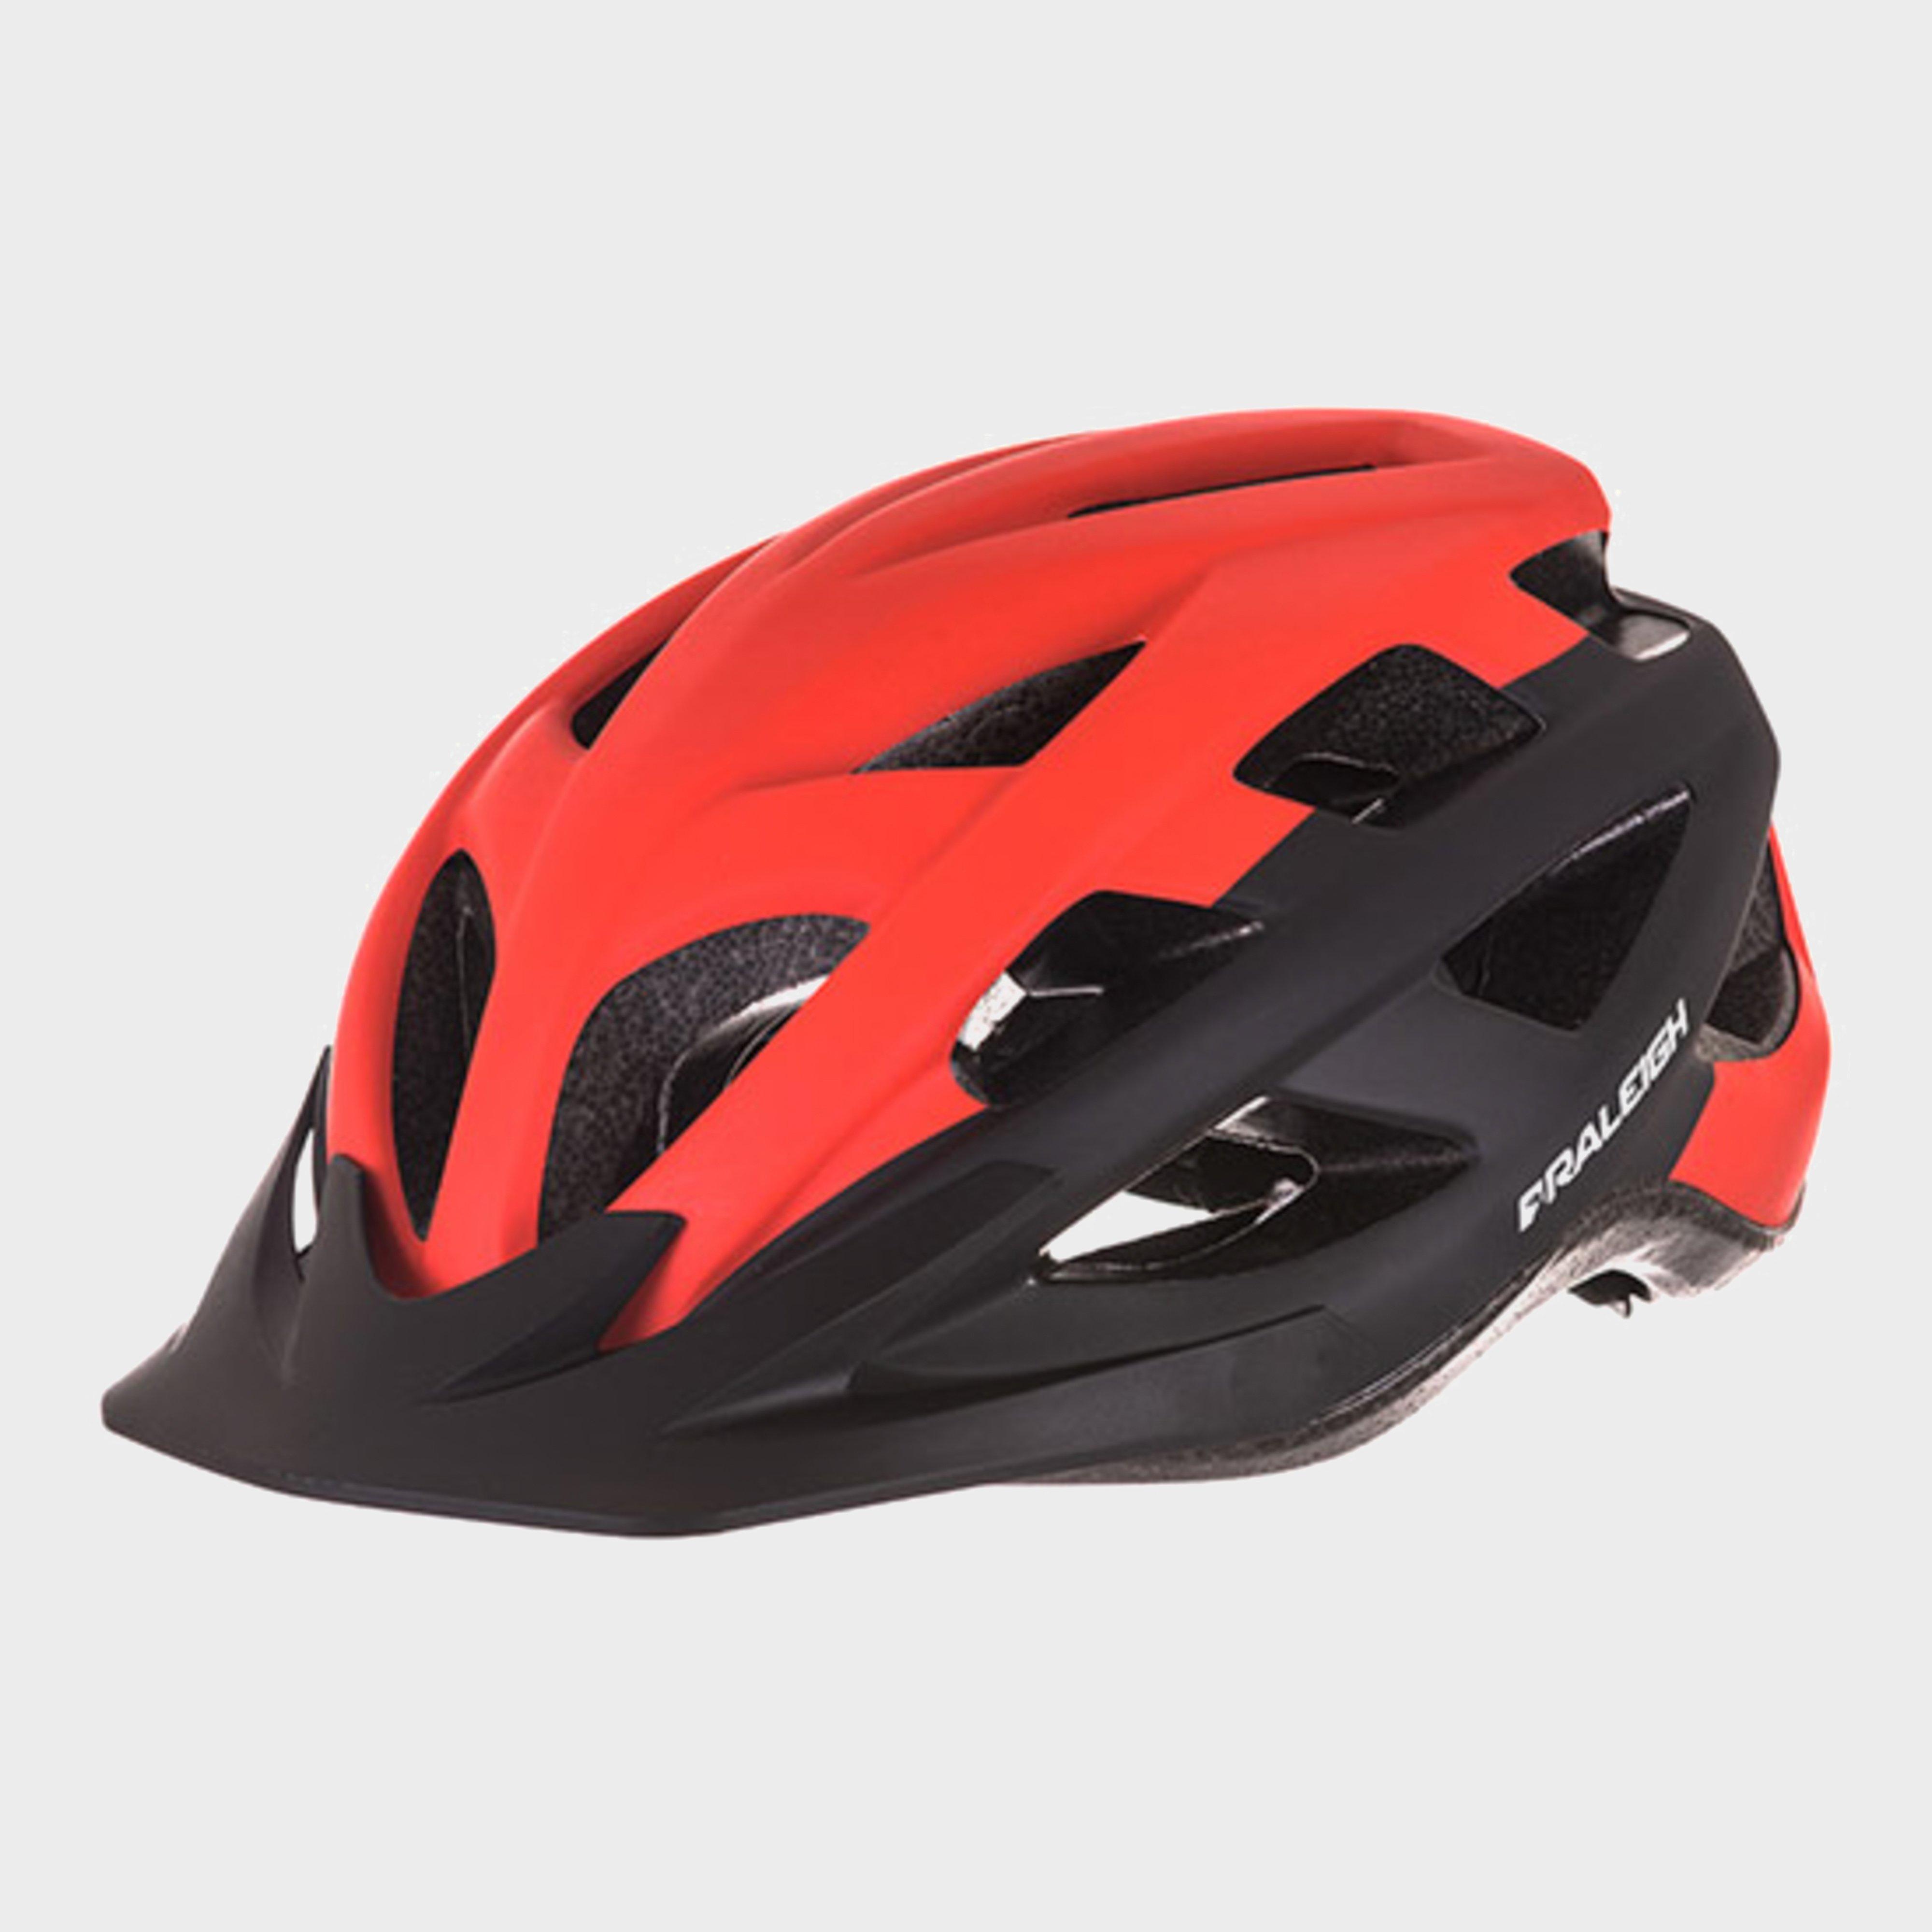 Blacks Raleigh Quest Cycling Helmet, Red